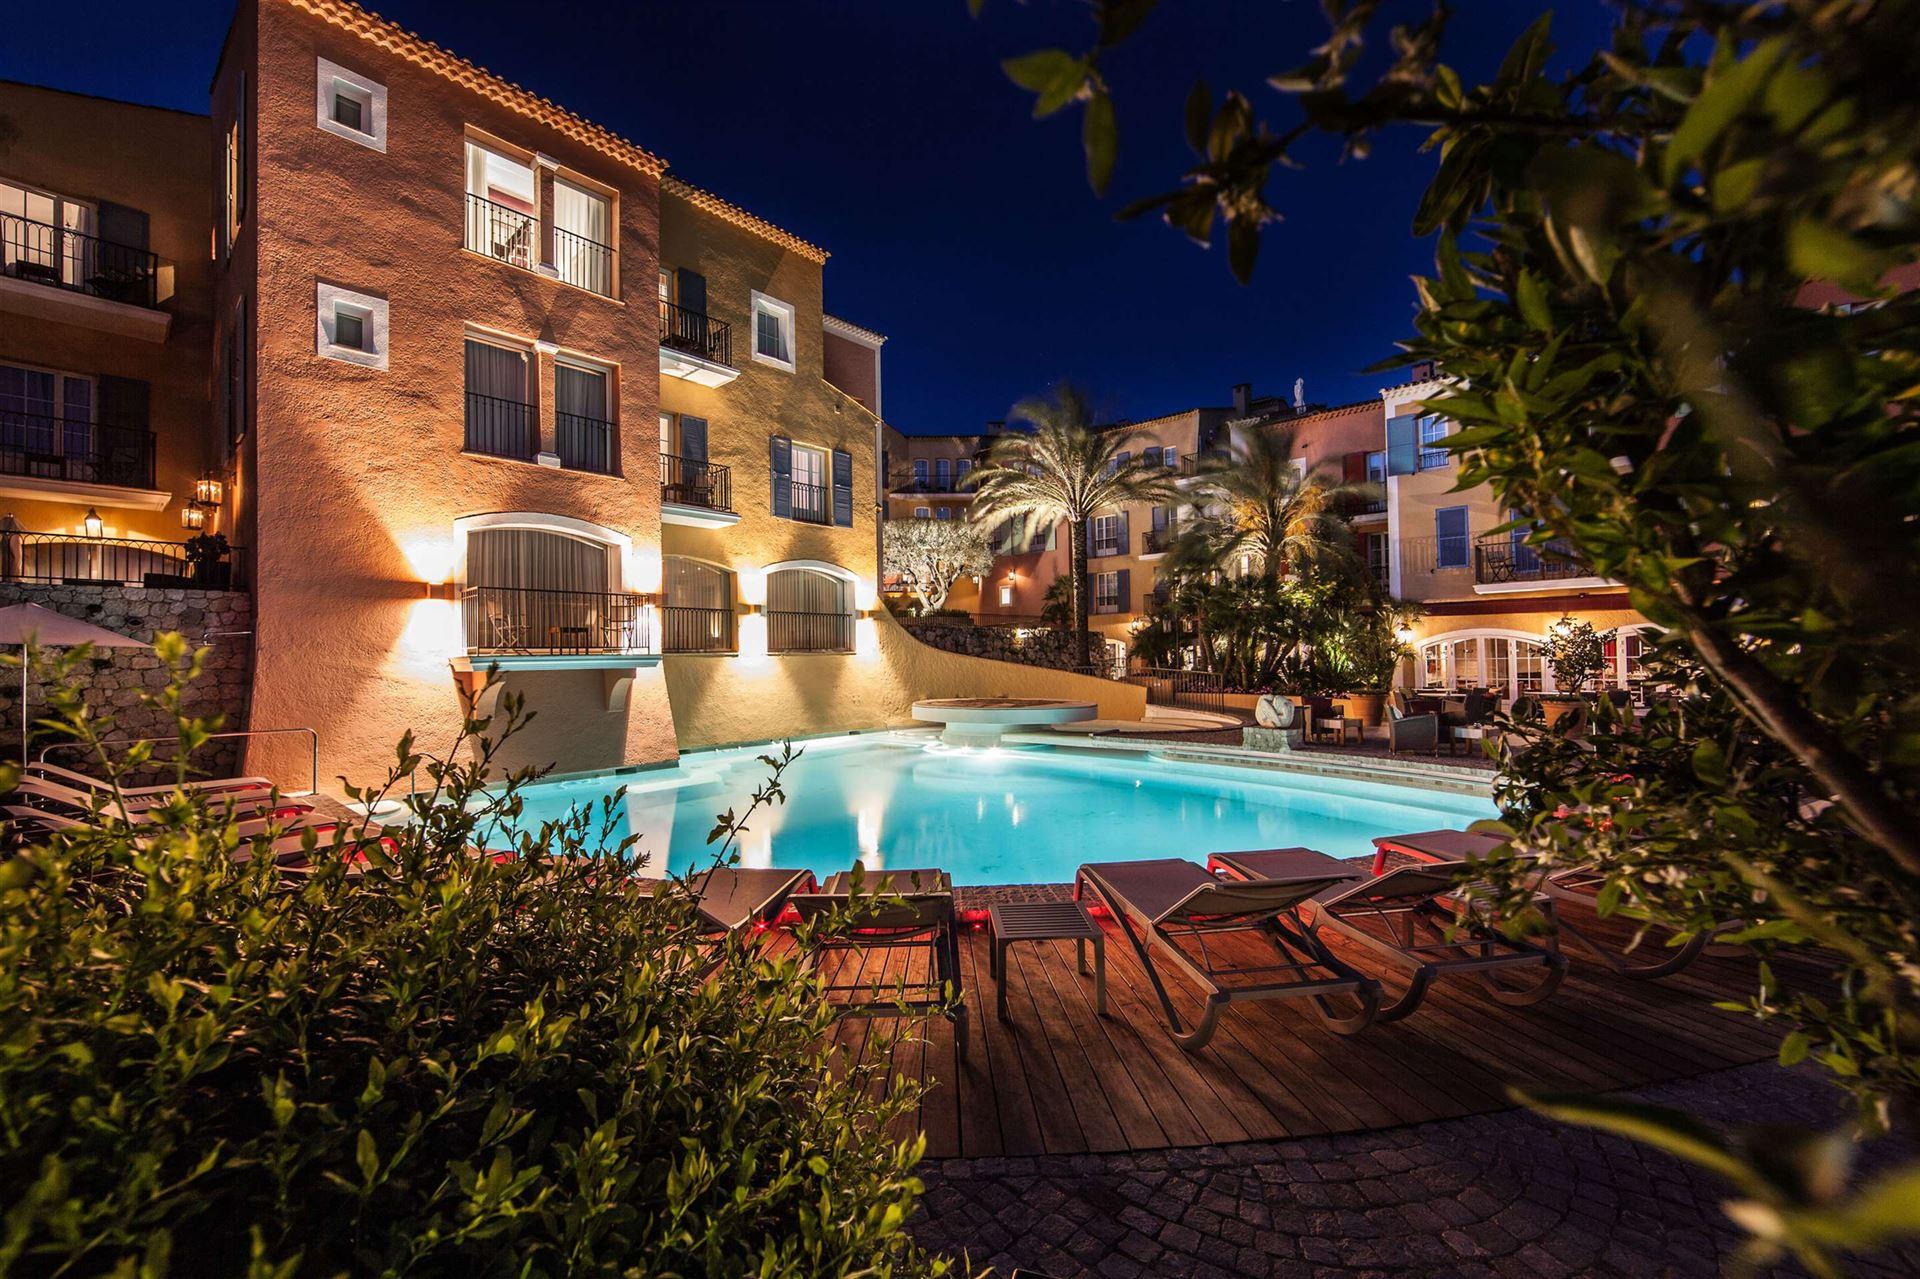 Hotel Byblos St. Tropez luxe hotel deals